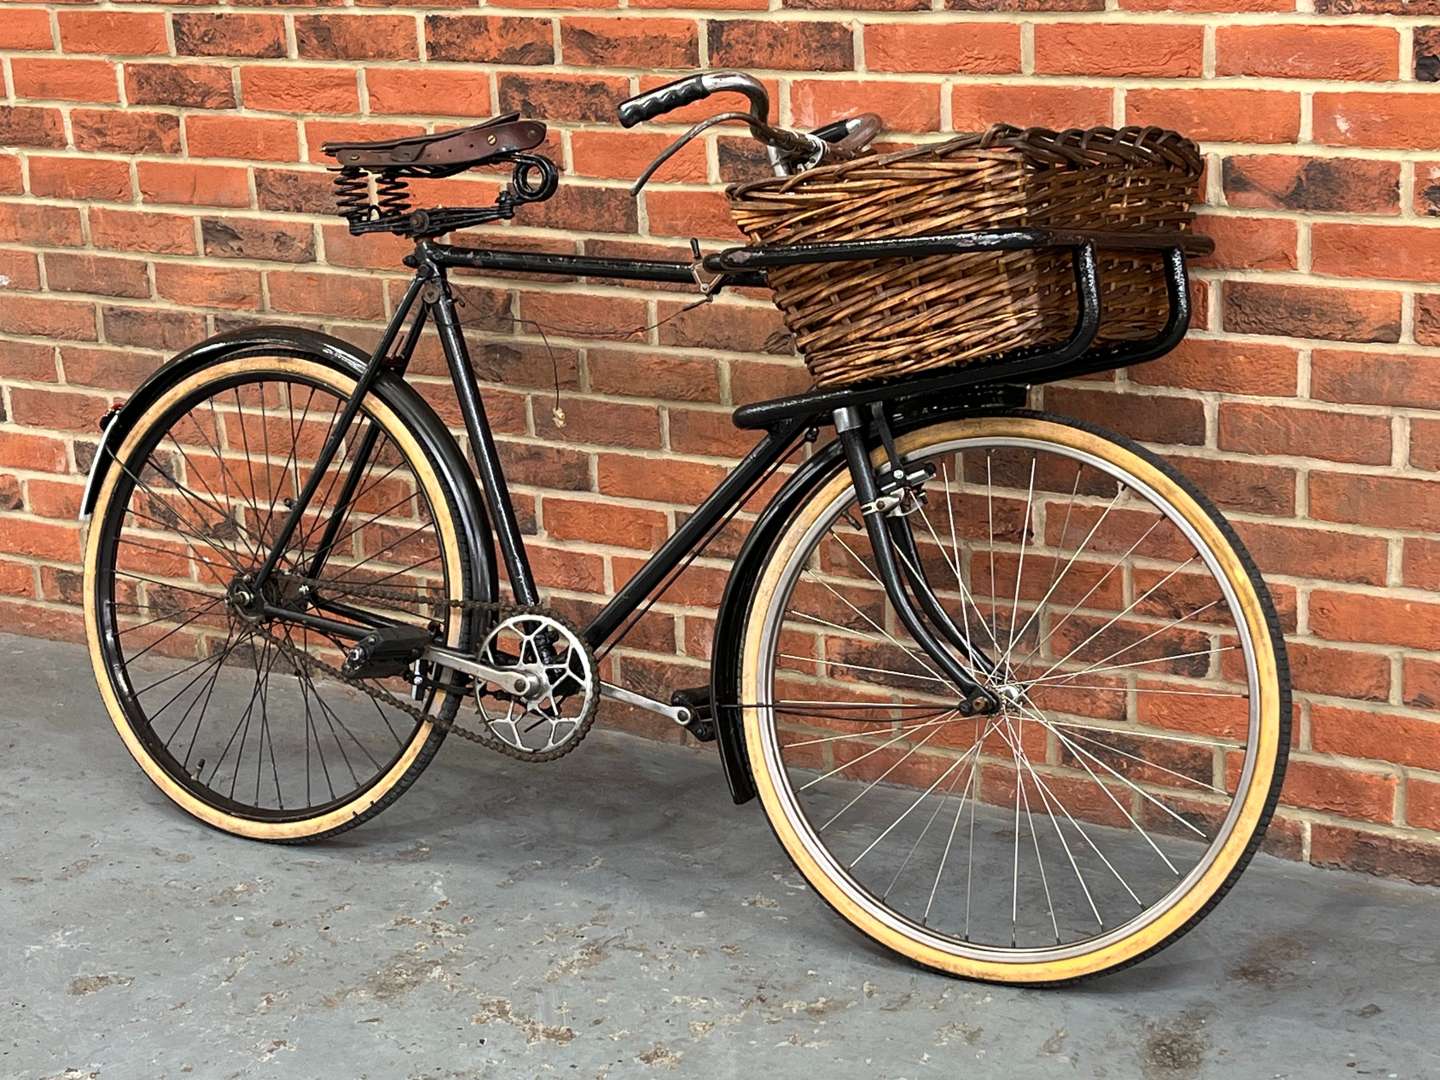 <p>Vintage Trade Bike and Basket</p>